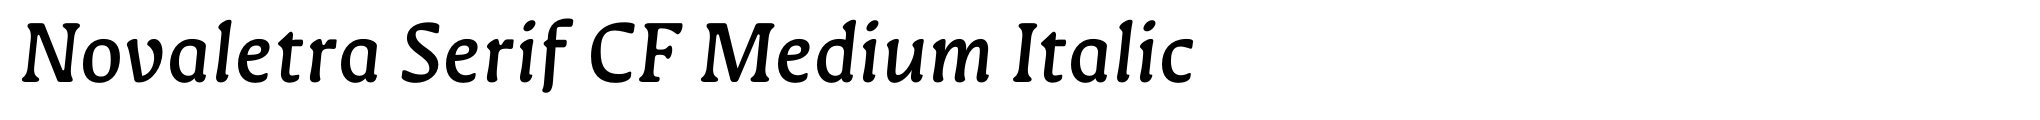 Novaletra Serif CF Medium Italic image